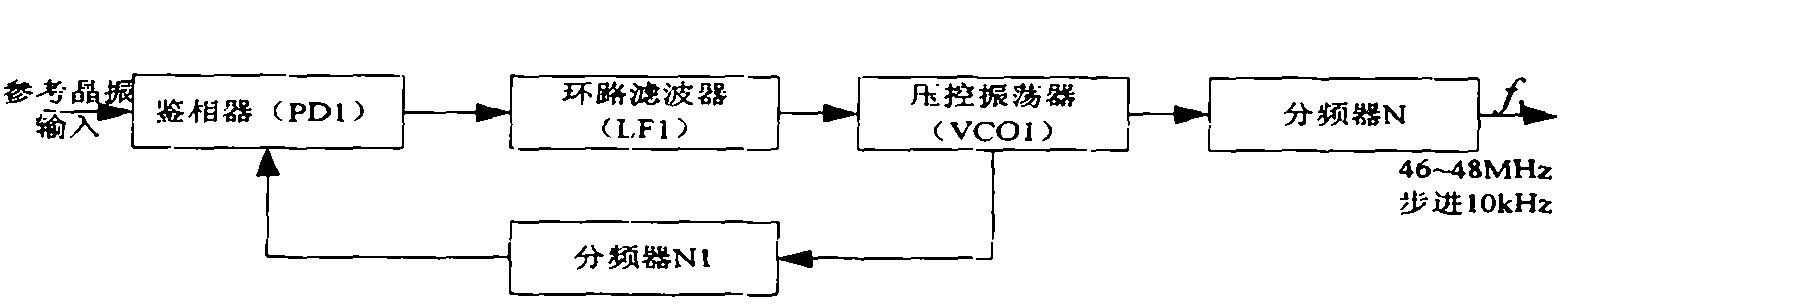 Novel TCAS (Traffic Collision Avoidance System) local oscillator design method